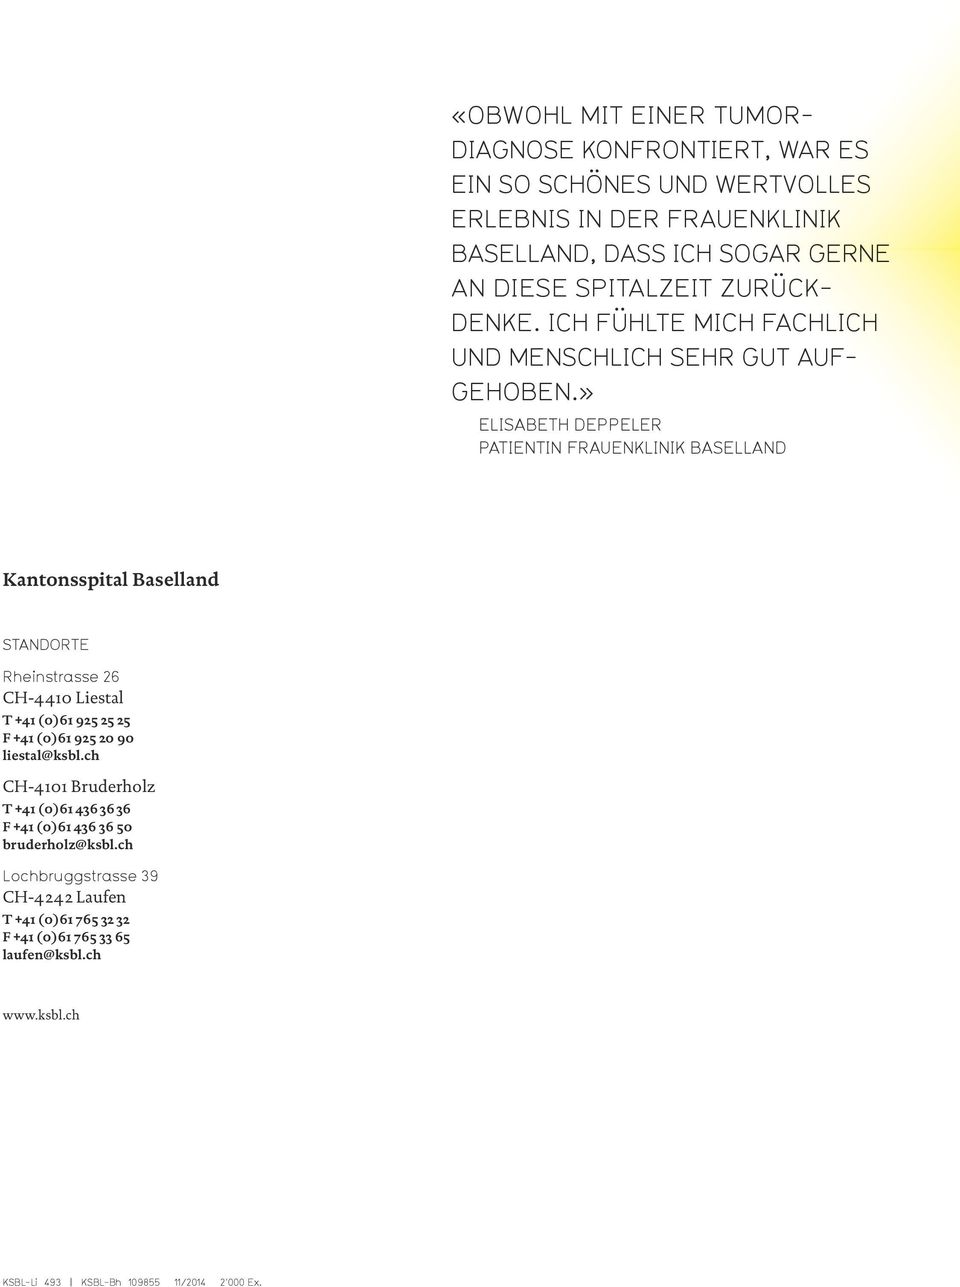 » Elisabeth Deppeler Patientin Frauenklinik baselland Kantonsspital Baselland STANDORTE Rheinstrasse 26 CH-4410 Liestal T +41 (0)61 925 25 25 F +41 (0)61 925 20